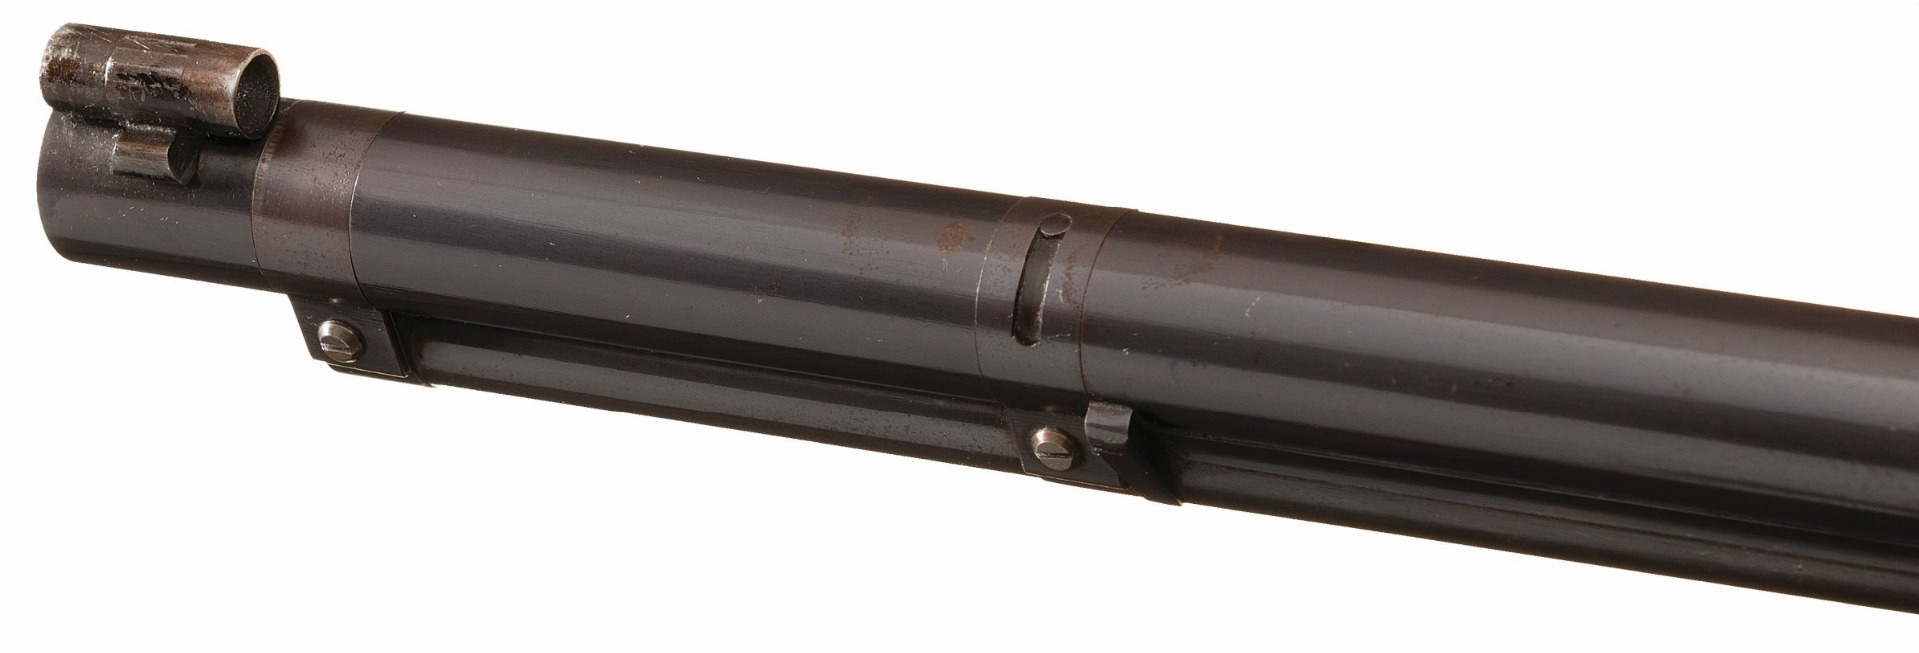 Smith & Wesson Prototype Lever Action Carbine magazine tube